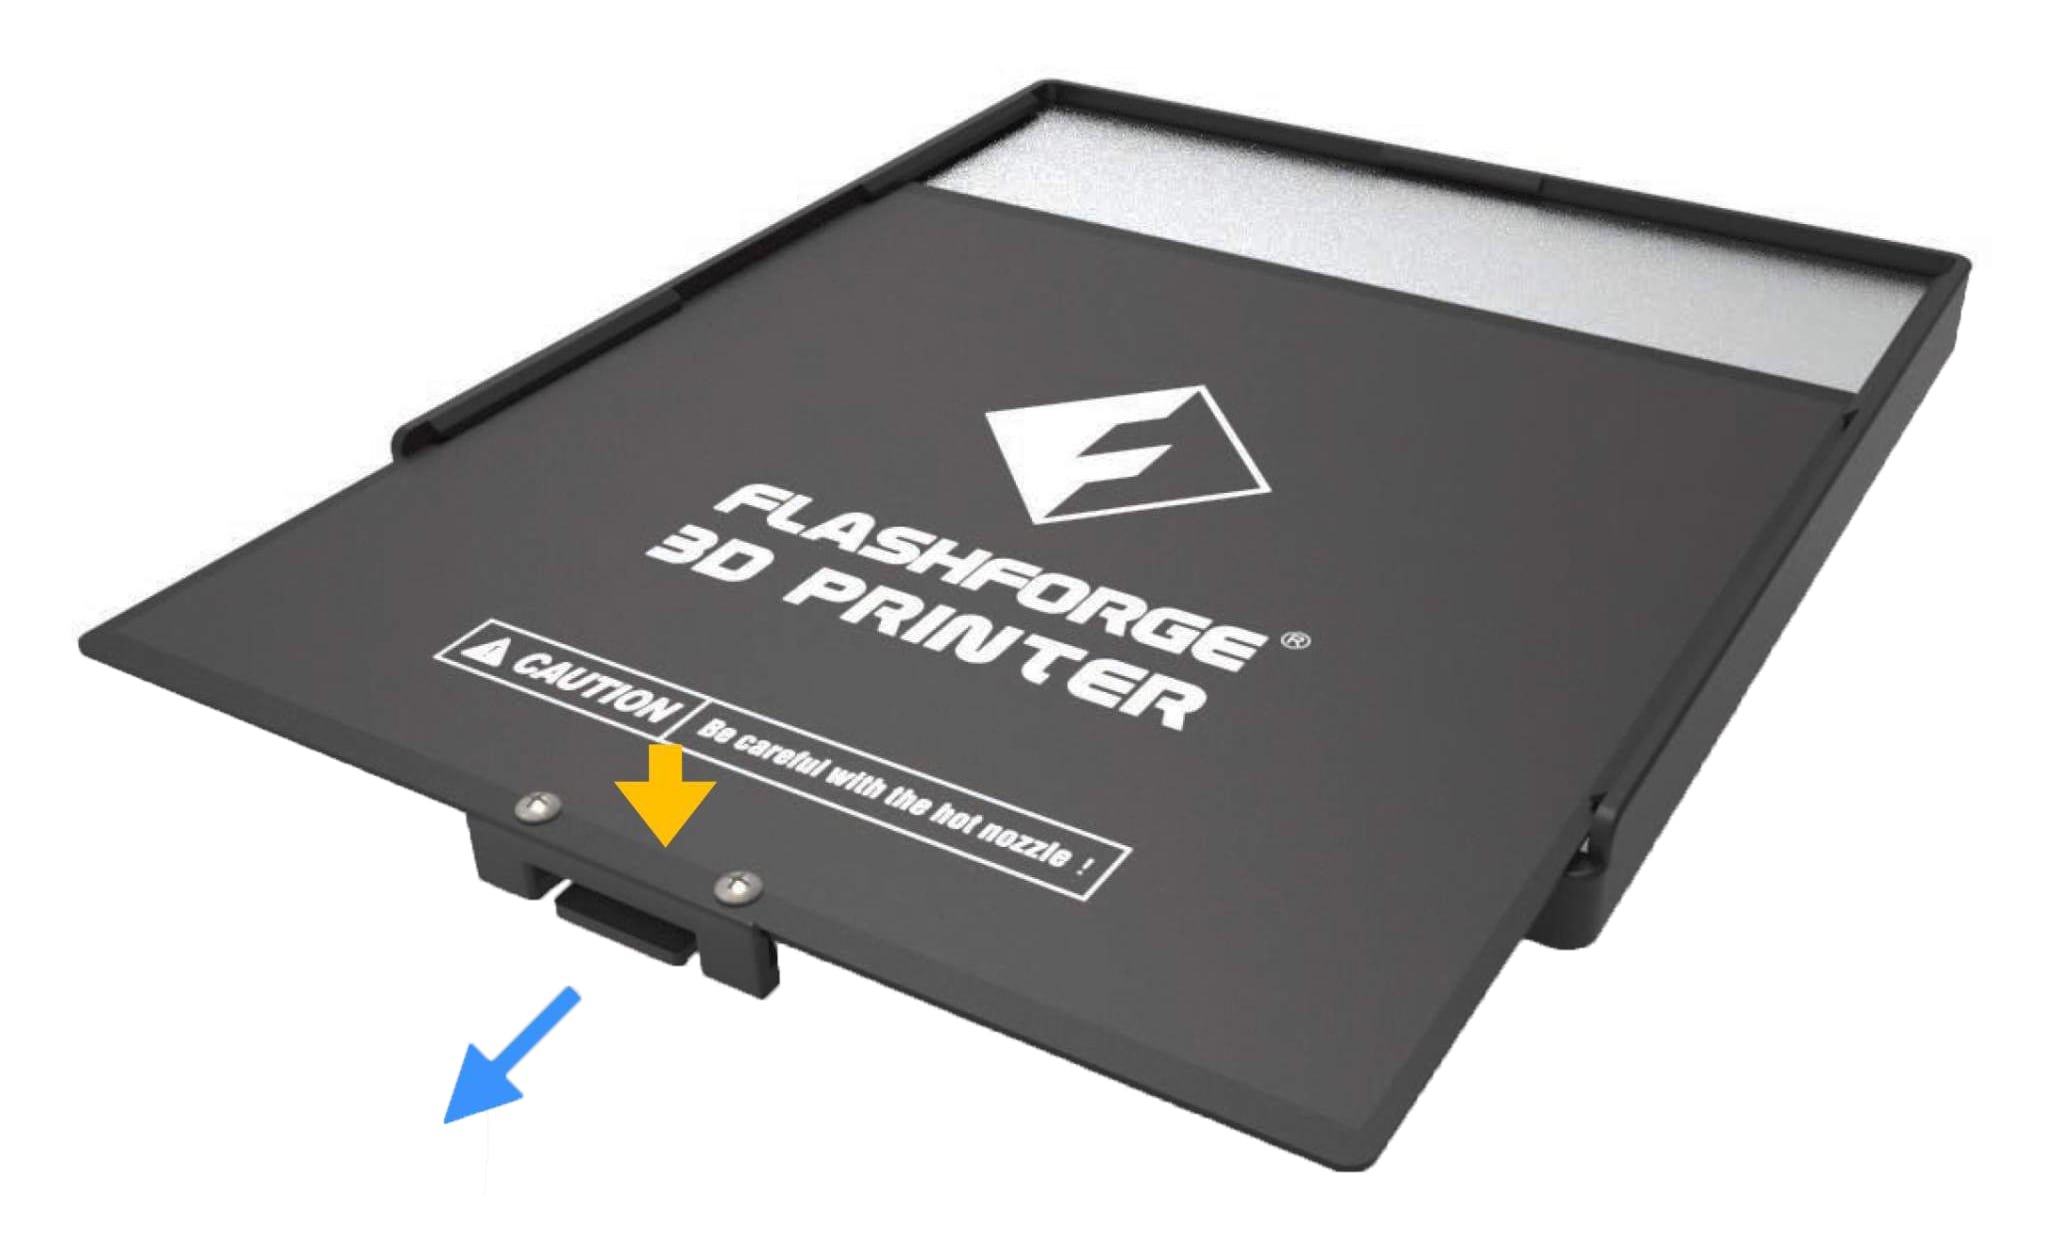 3D принтер Flashforge Adventurer 3